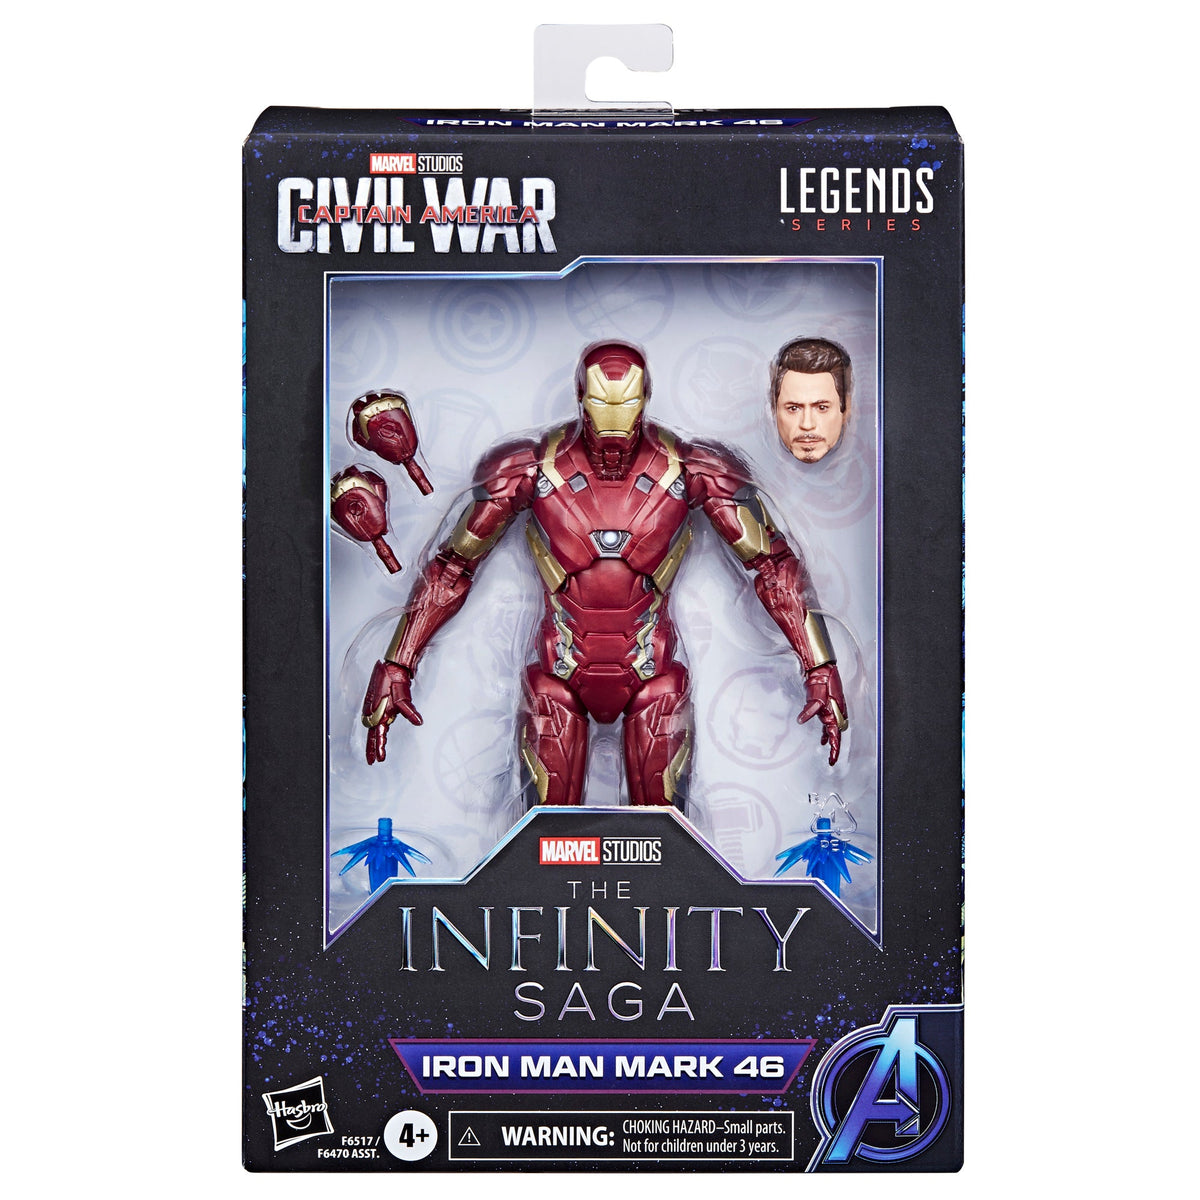 Nos Figurines Iron Man – Boutique Héros France®